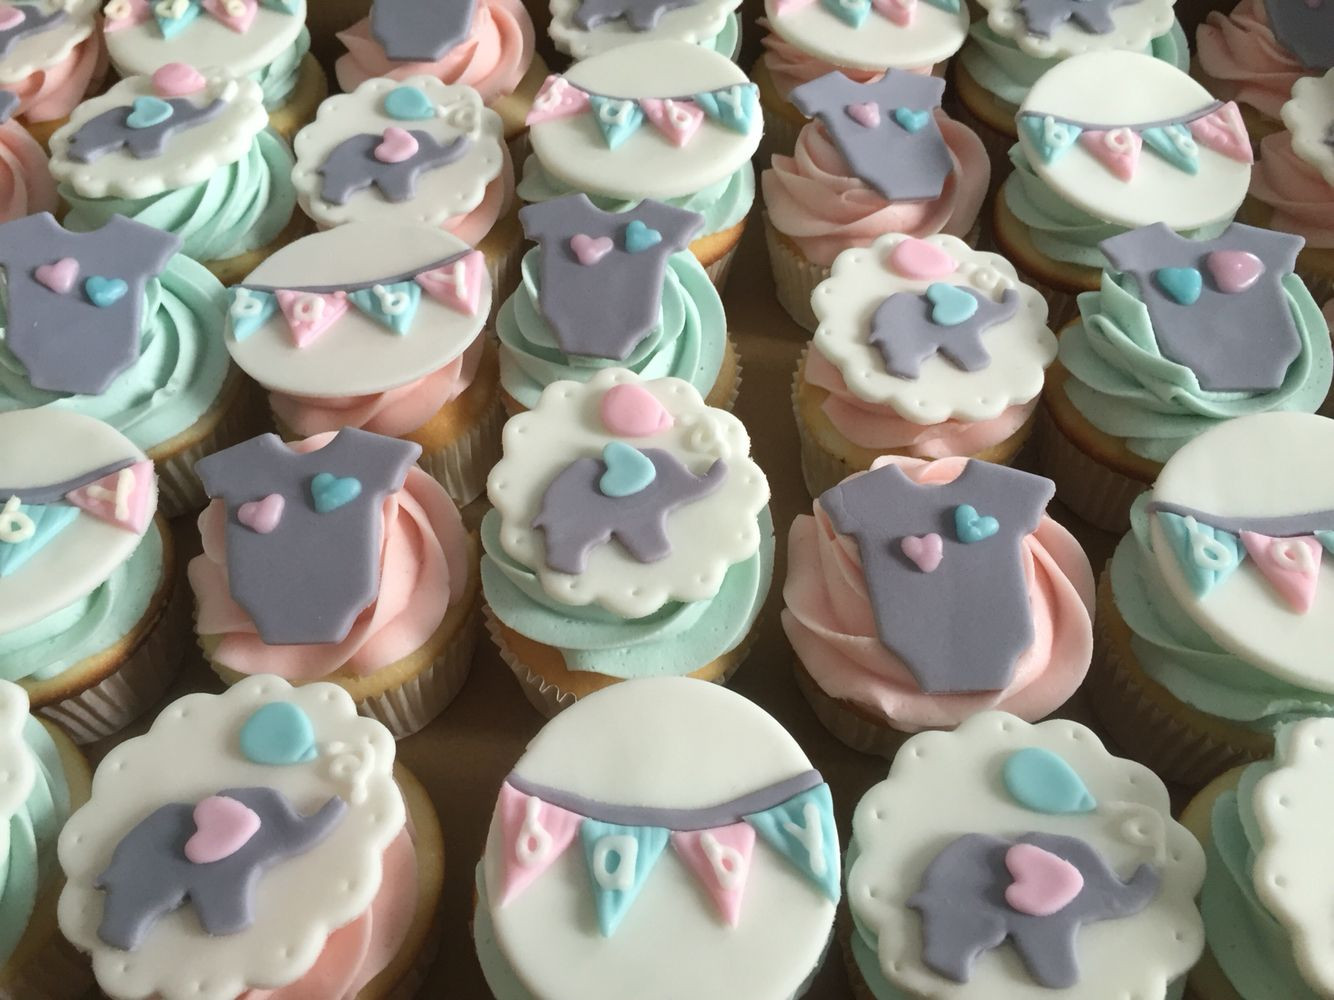 Baby Boy Cupcake Decorating Ideas
 Elephant baby shower cupcakes